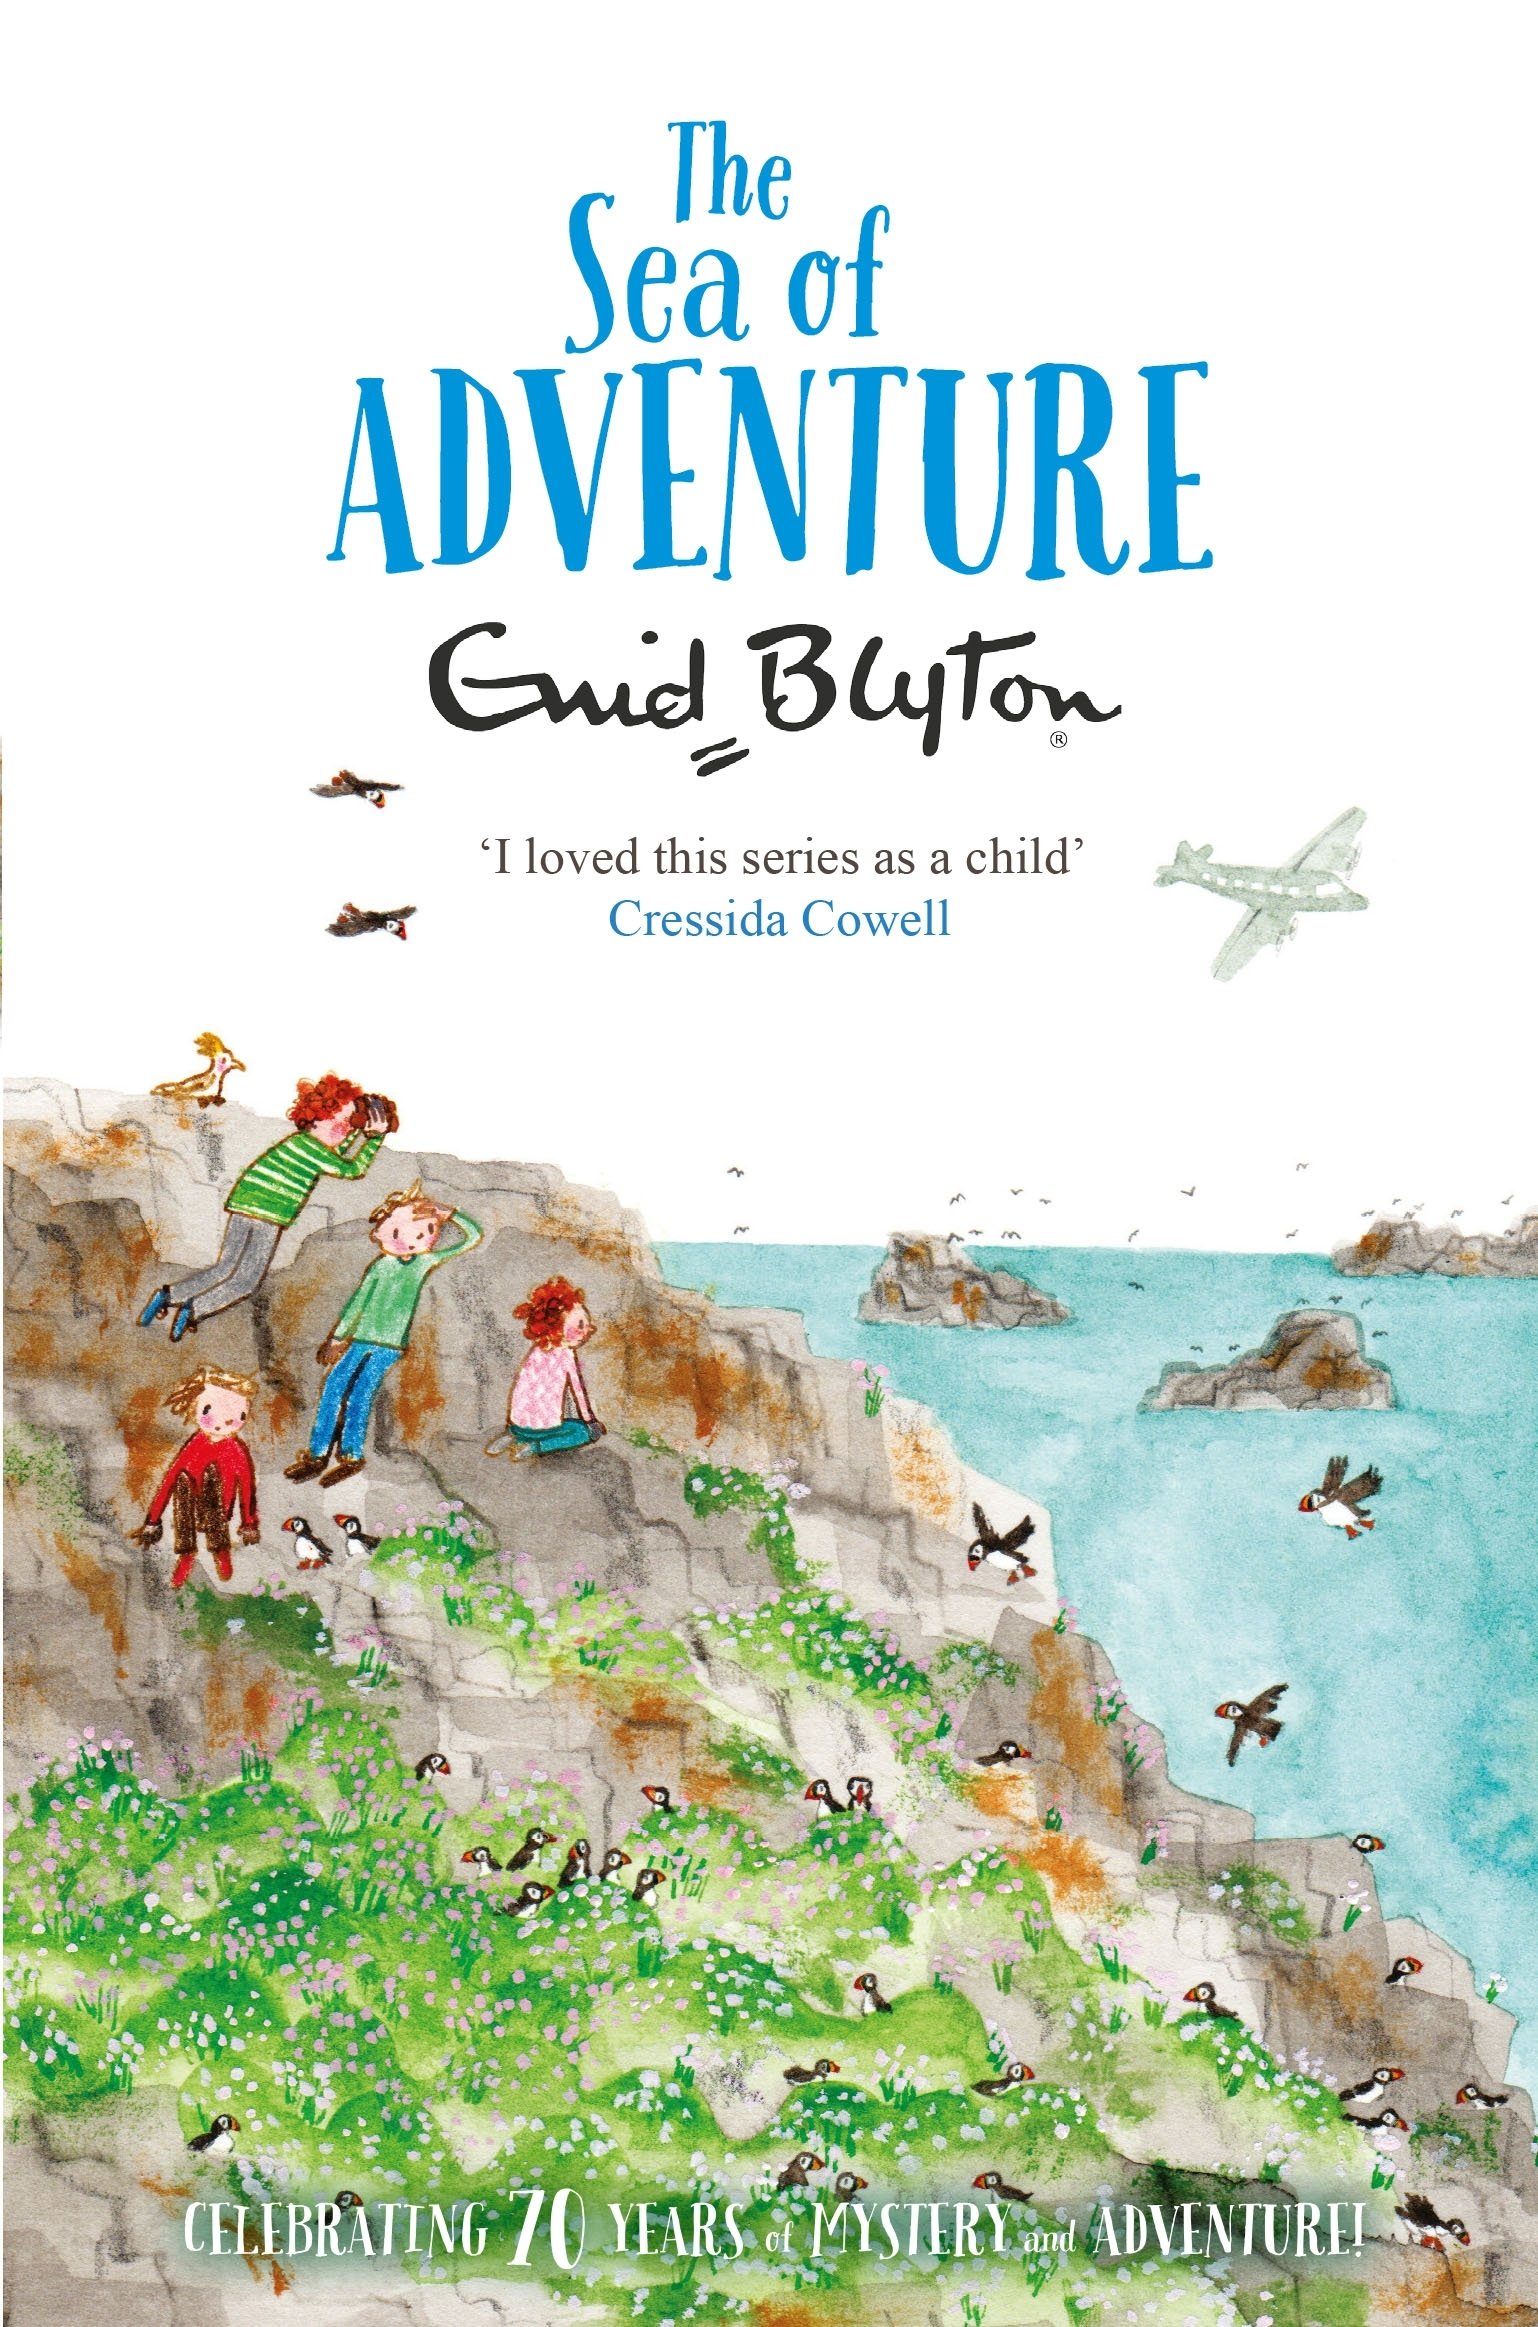 The Sea of Adventure - Enid Blyton